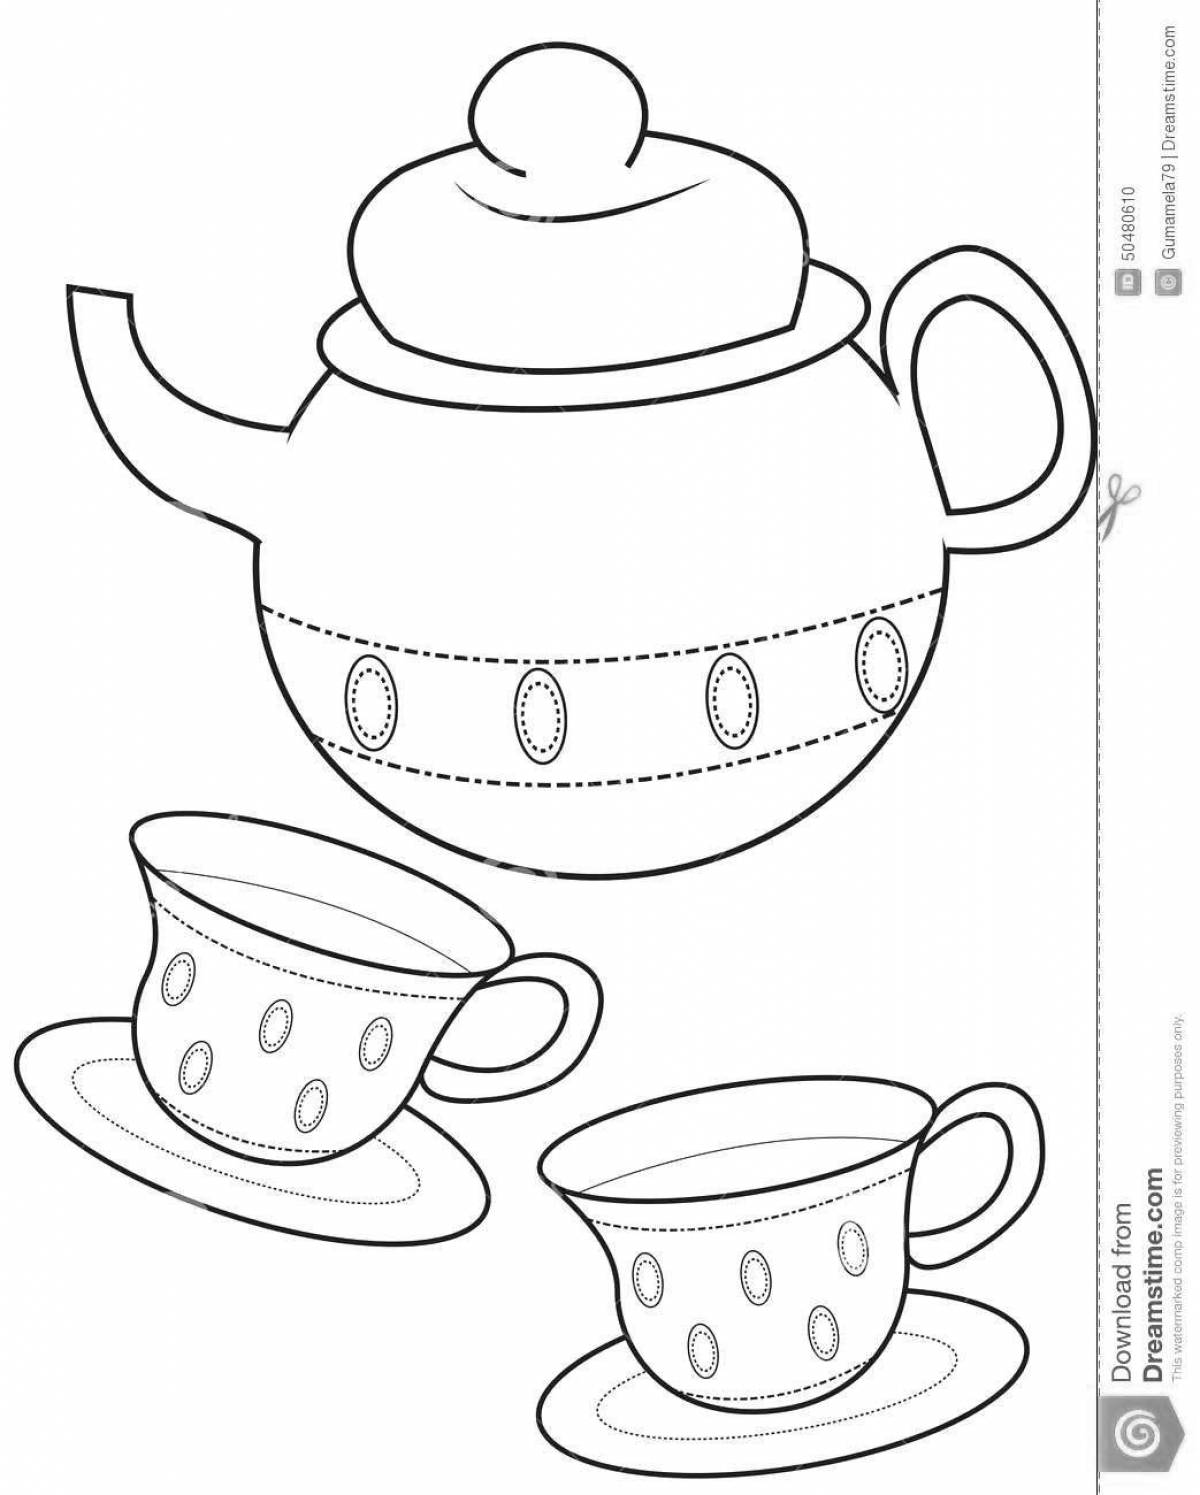 Delightful polka dot mug coloring book